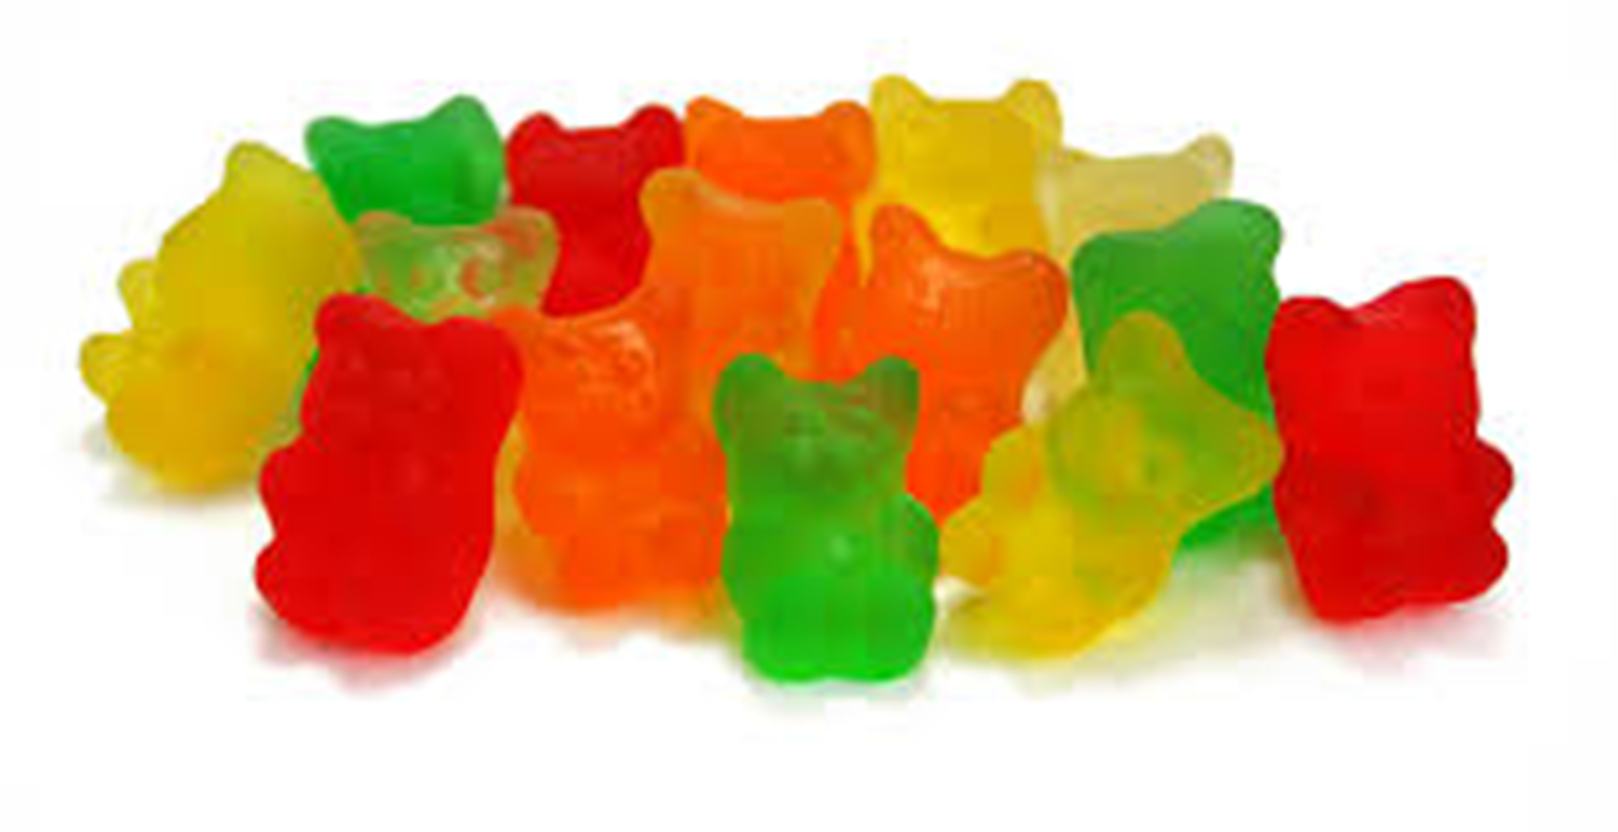 Gummi Bears, 8 oz